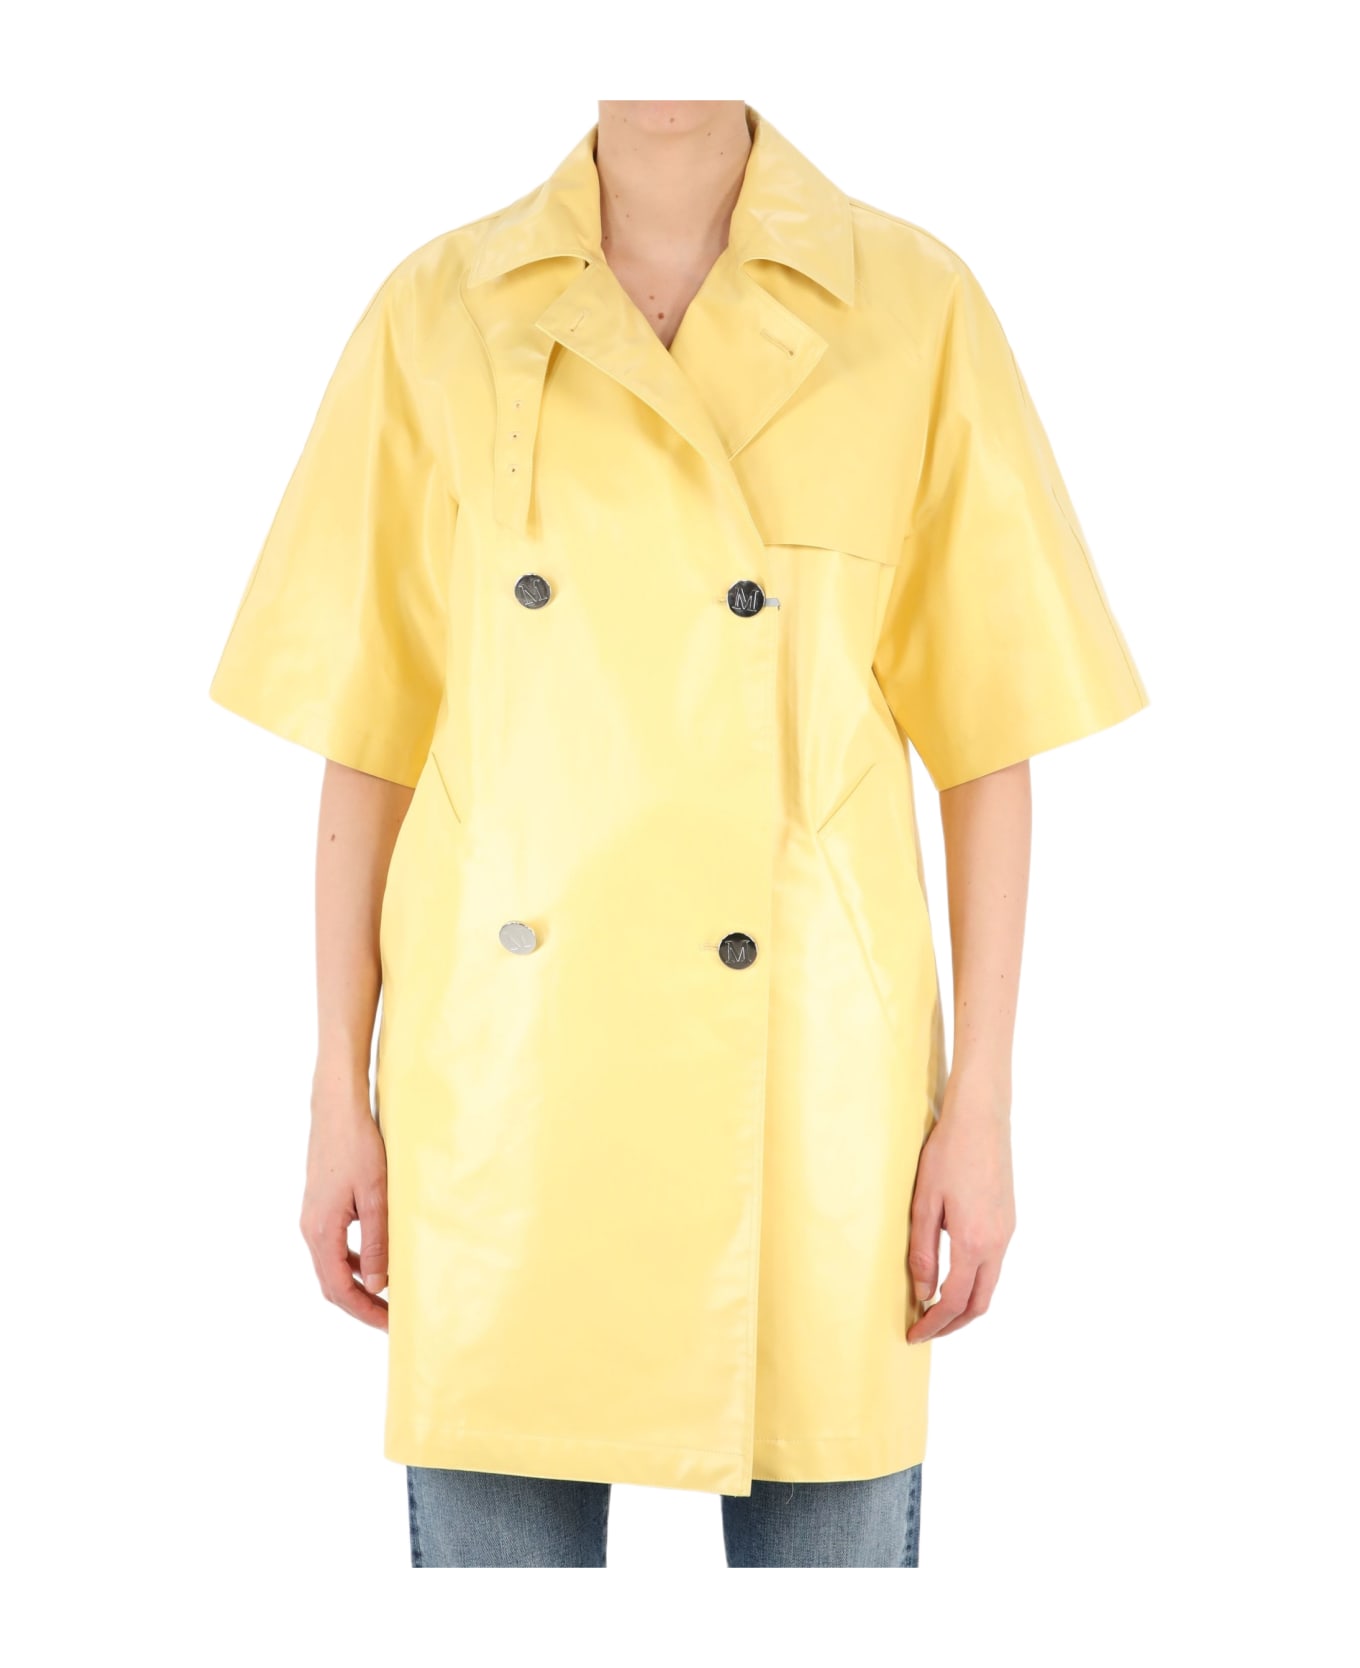 Max Mara Yellow Raincoat - YELLOW レインコート